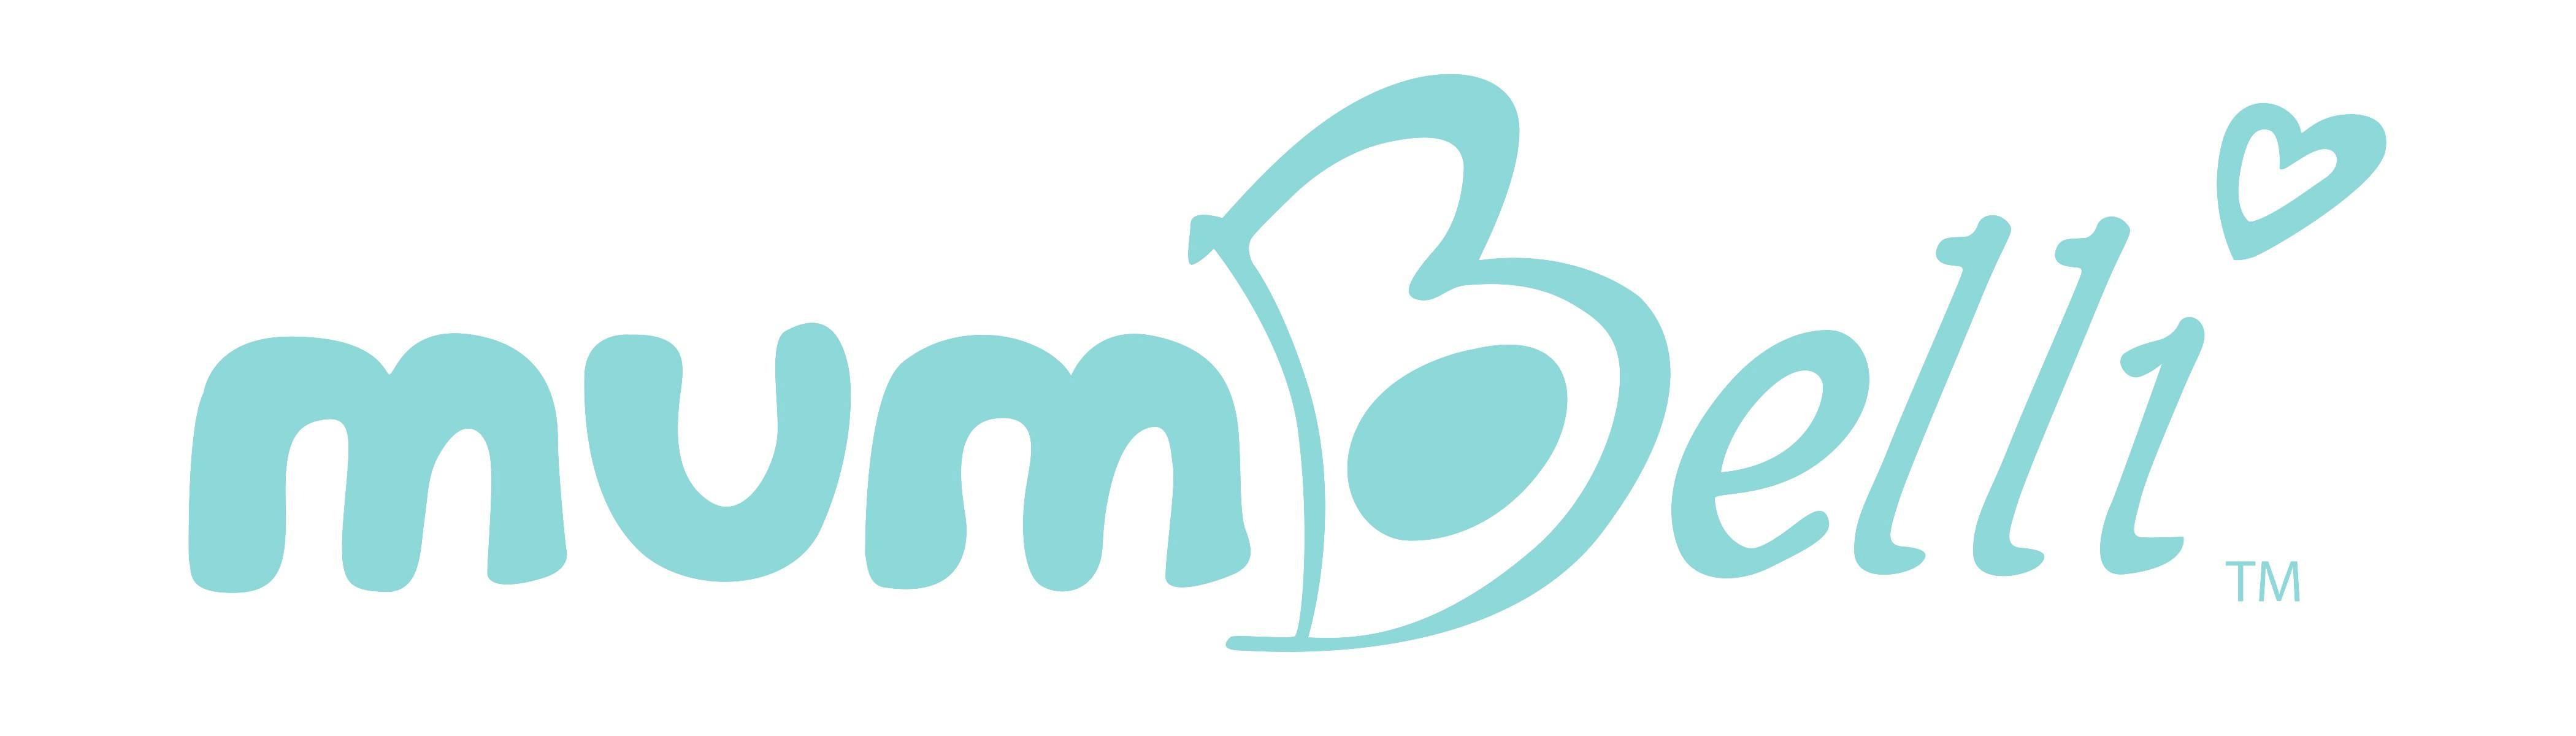 Mumbelli Logo New